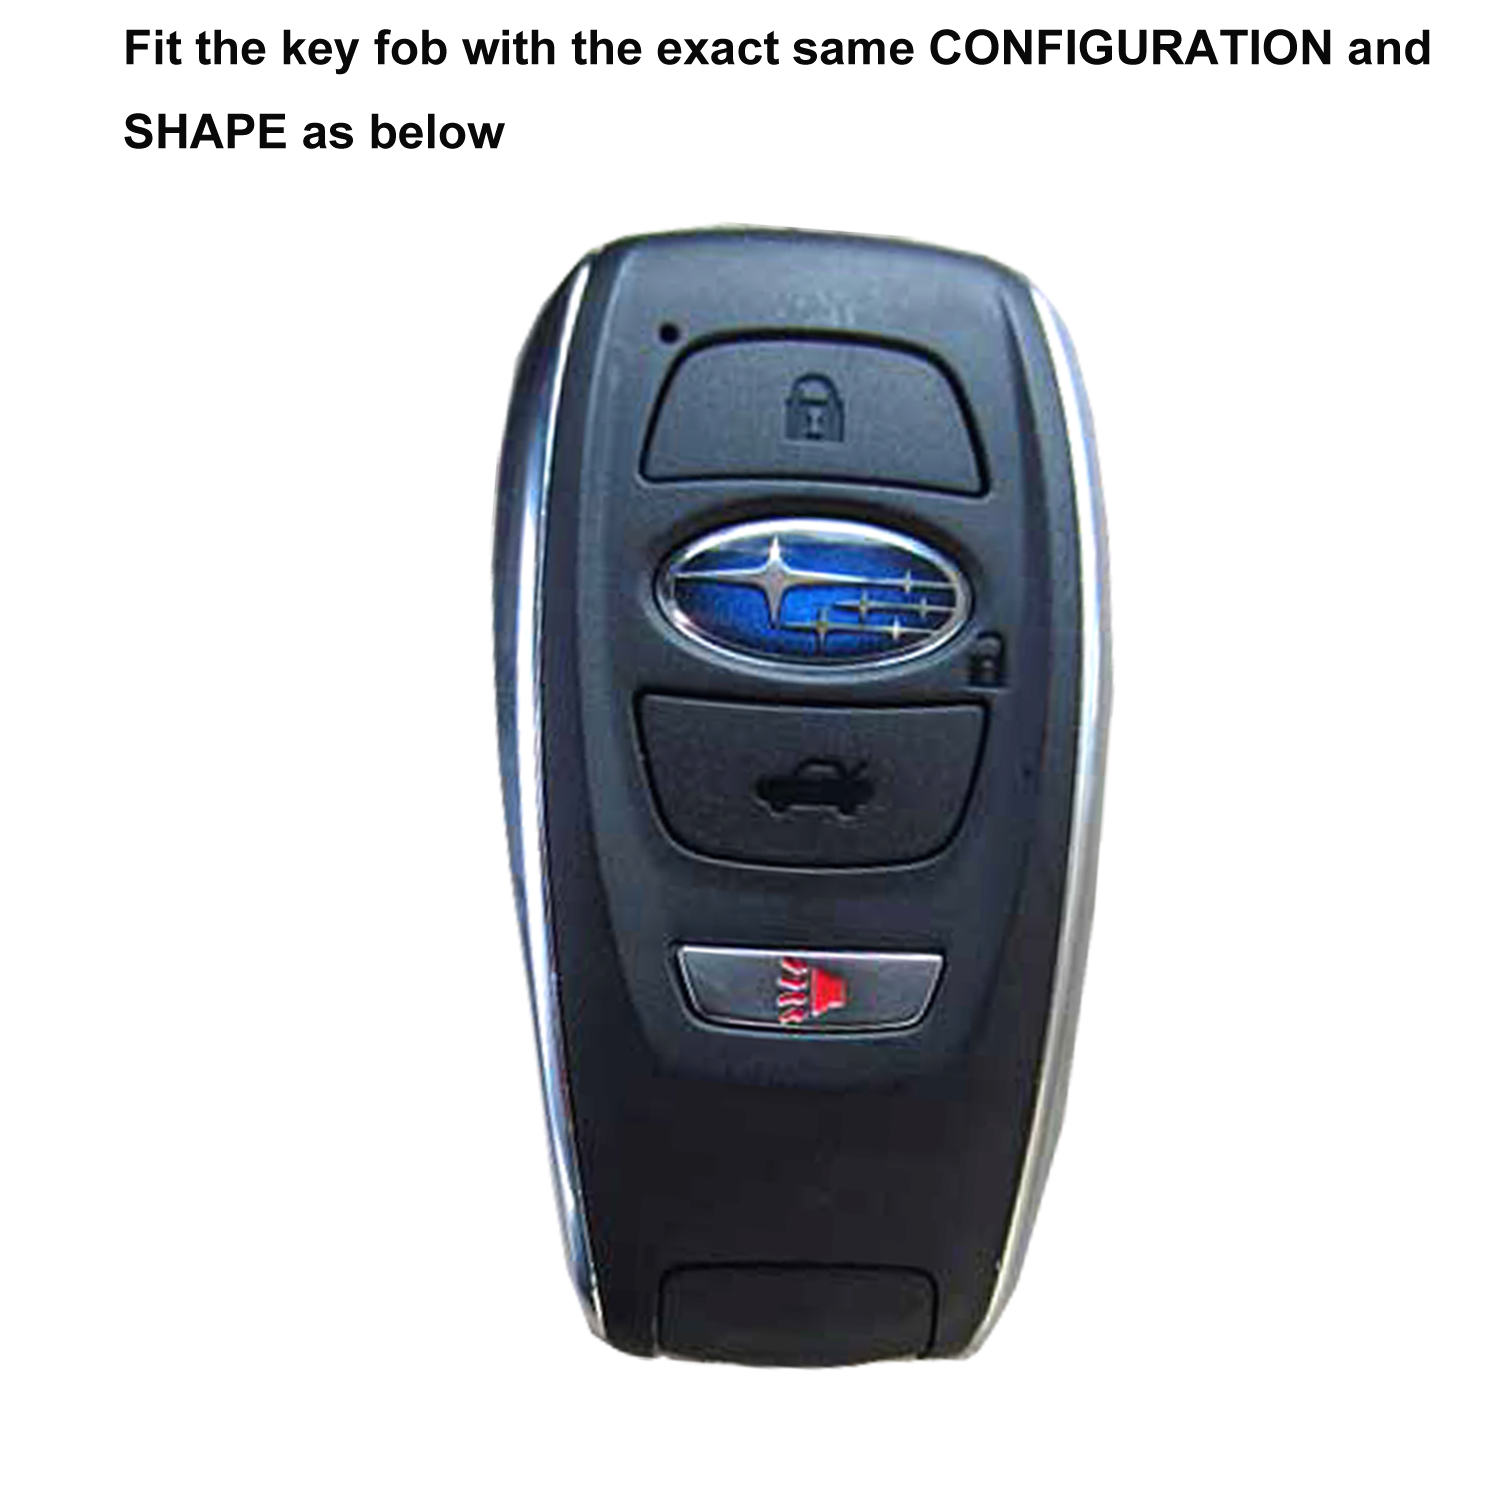 Coolbestda Silicone 4 Buttons Smart Key Fob Cover Remote Case Keyless Protector Skin for 2018 2017 Subaru Forester Sti 2017 2018 Outback Legacy 2015-2018 XV Crosstrek Impreza 2014-2017 BRZ 2016 WRX